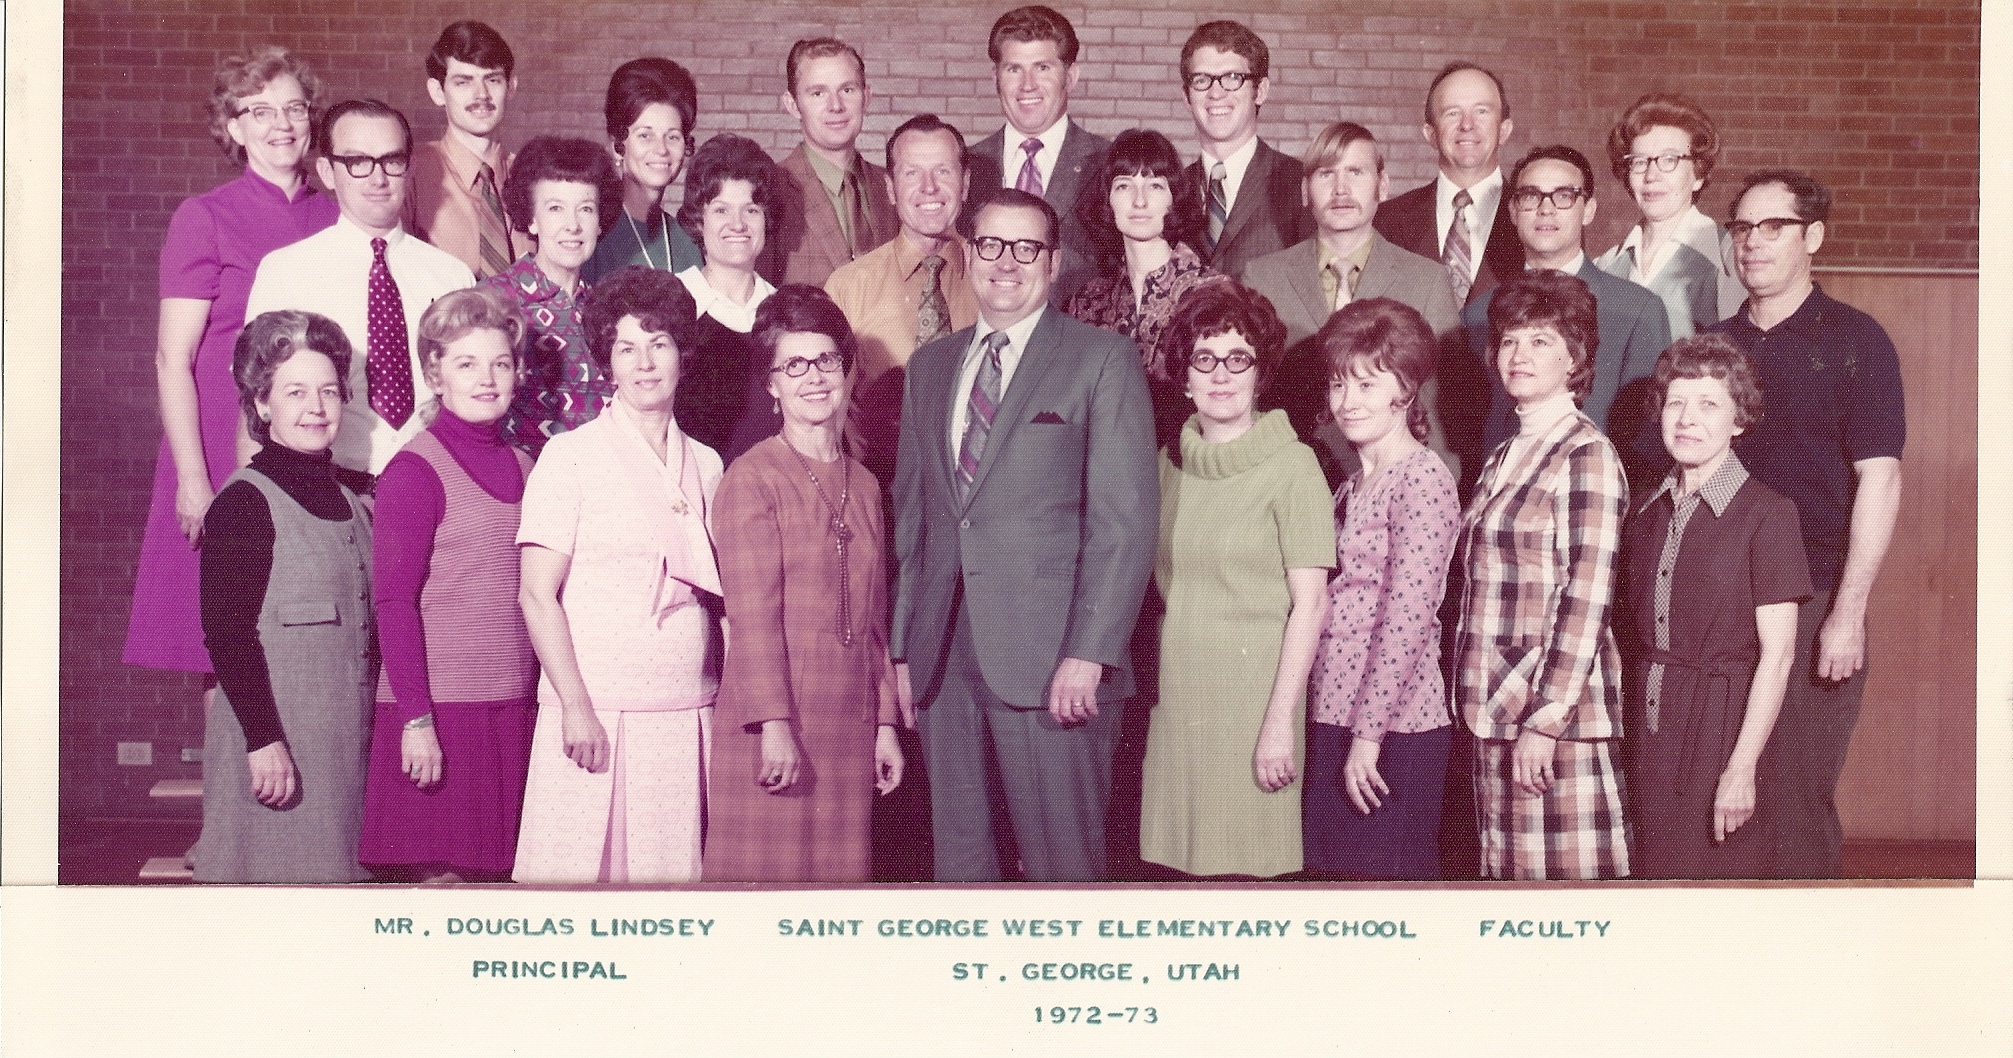 WCHS-00236 West Elementary School 1972-1973 Faculty